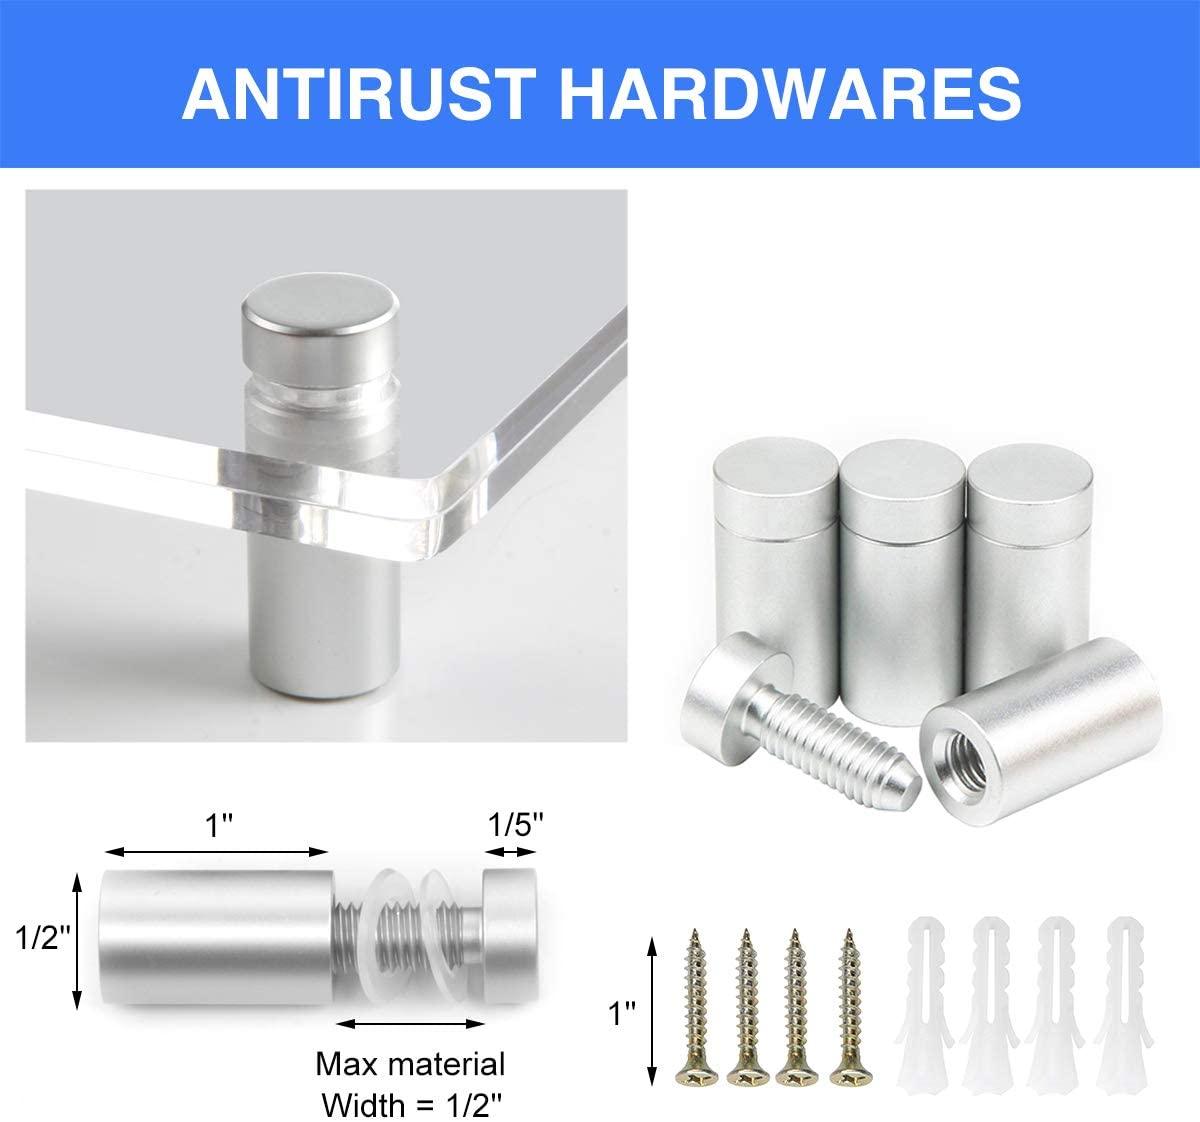 antirust hardwares